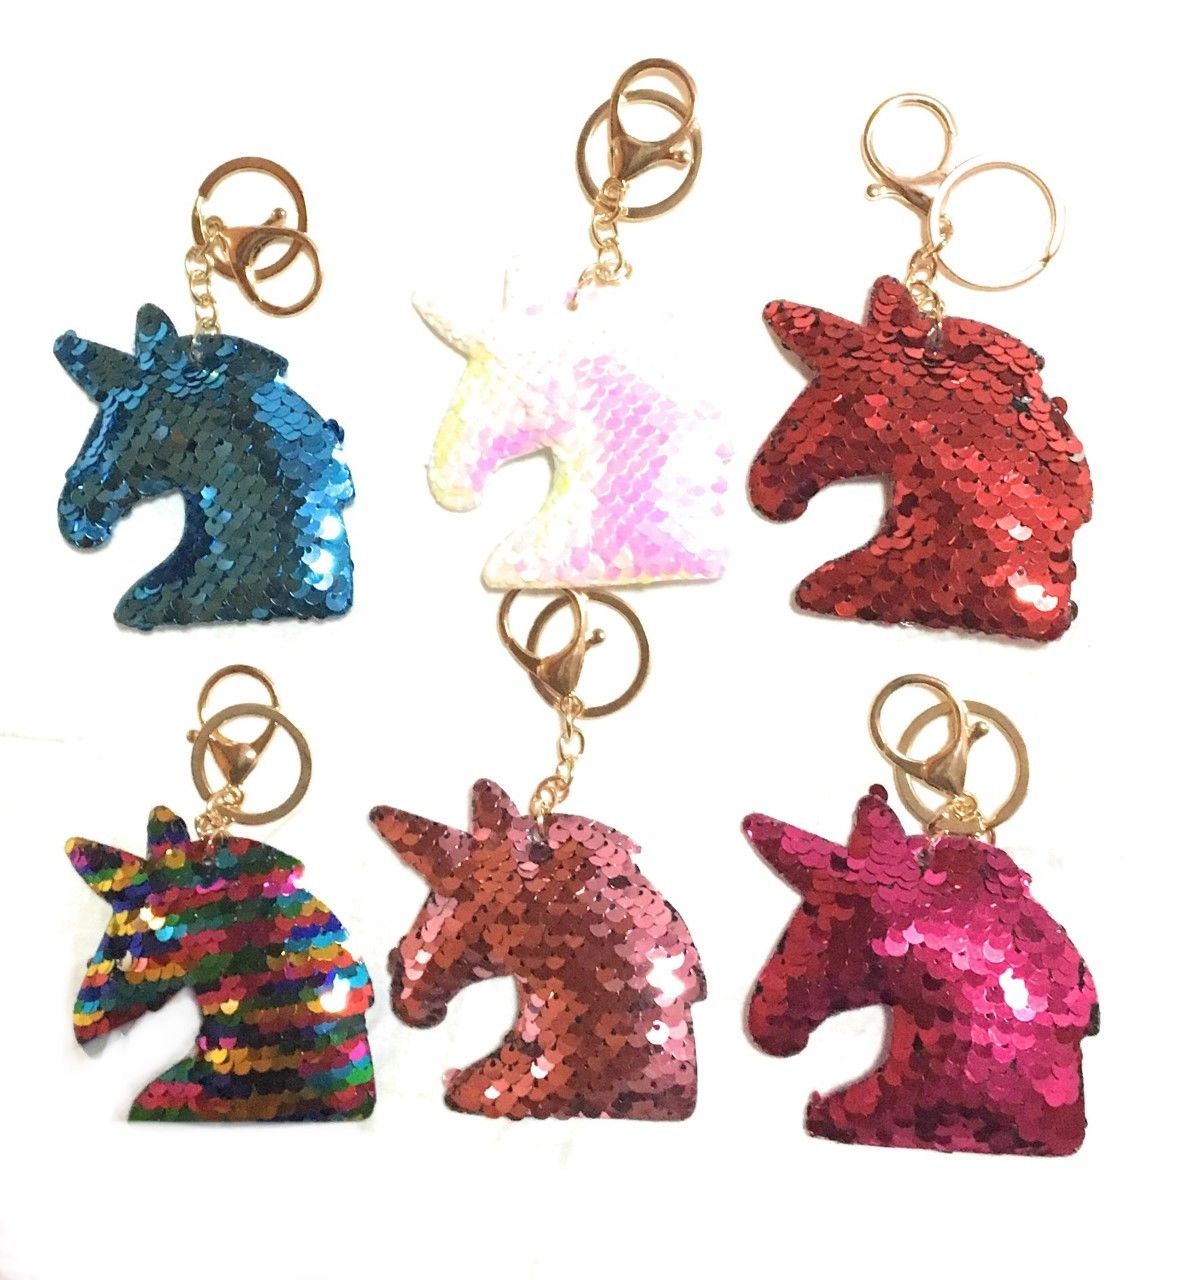 SEQUIN Unicorn Head Keychain Keyring Handbag Bag Charm Girls Xmas Stocking Party Bag Filler